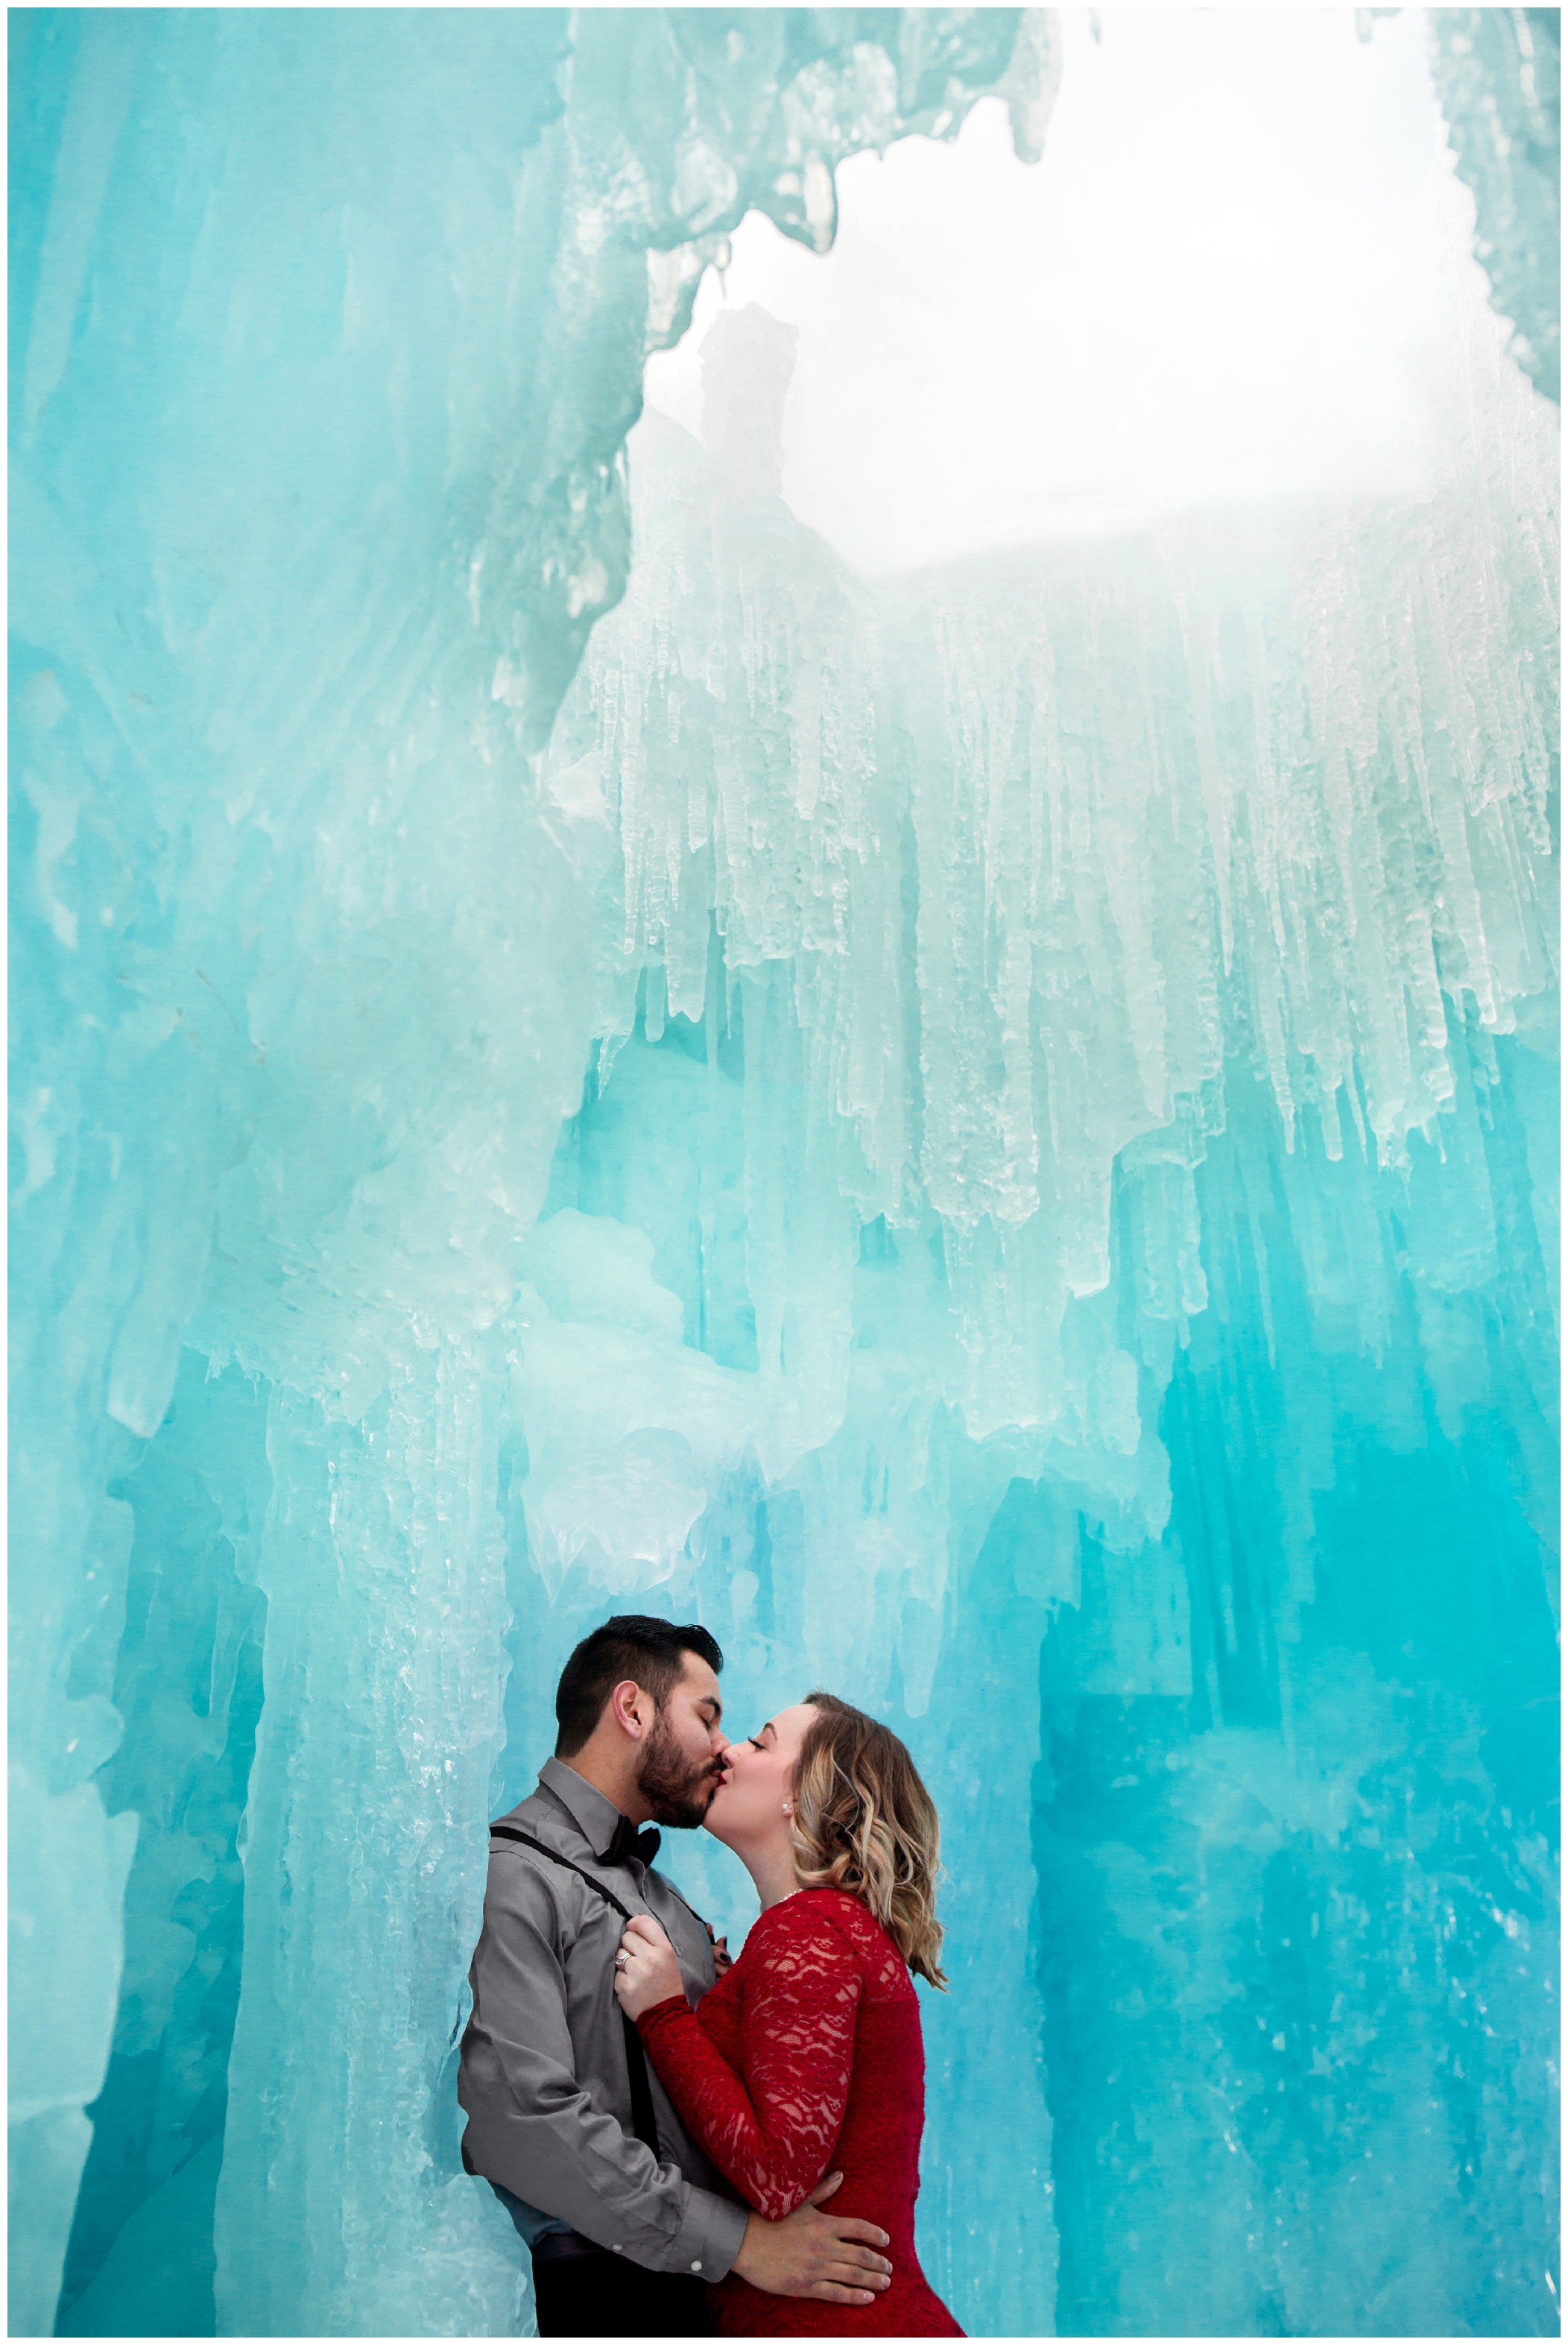 Ice Castle engagement photos in Dillon, Colorado by Breckenridge portrait photographer Plum Pretty Photography